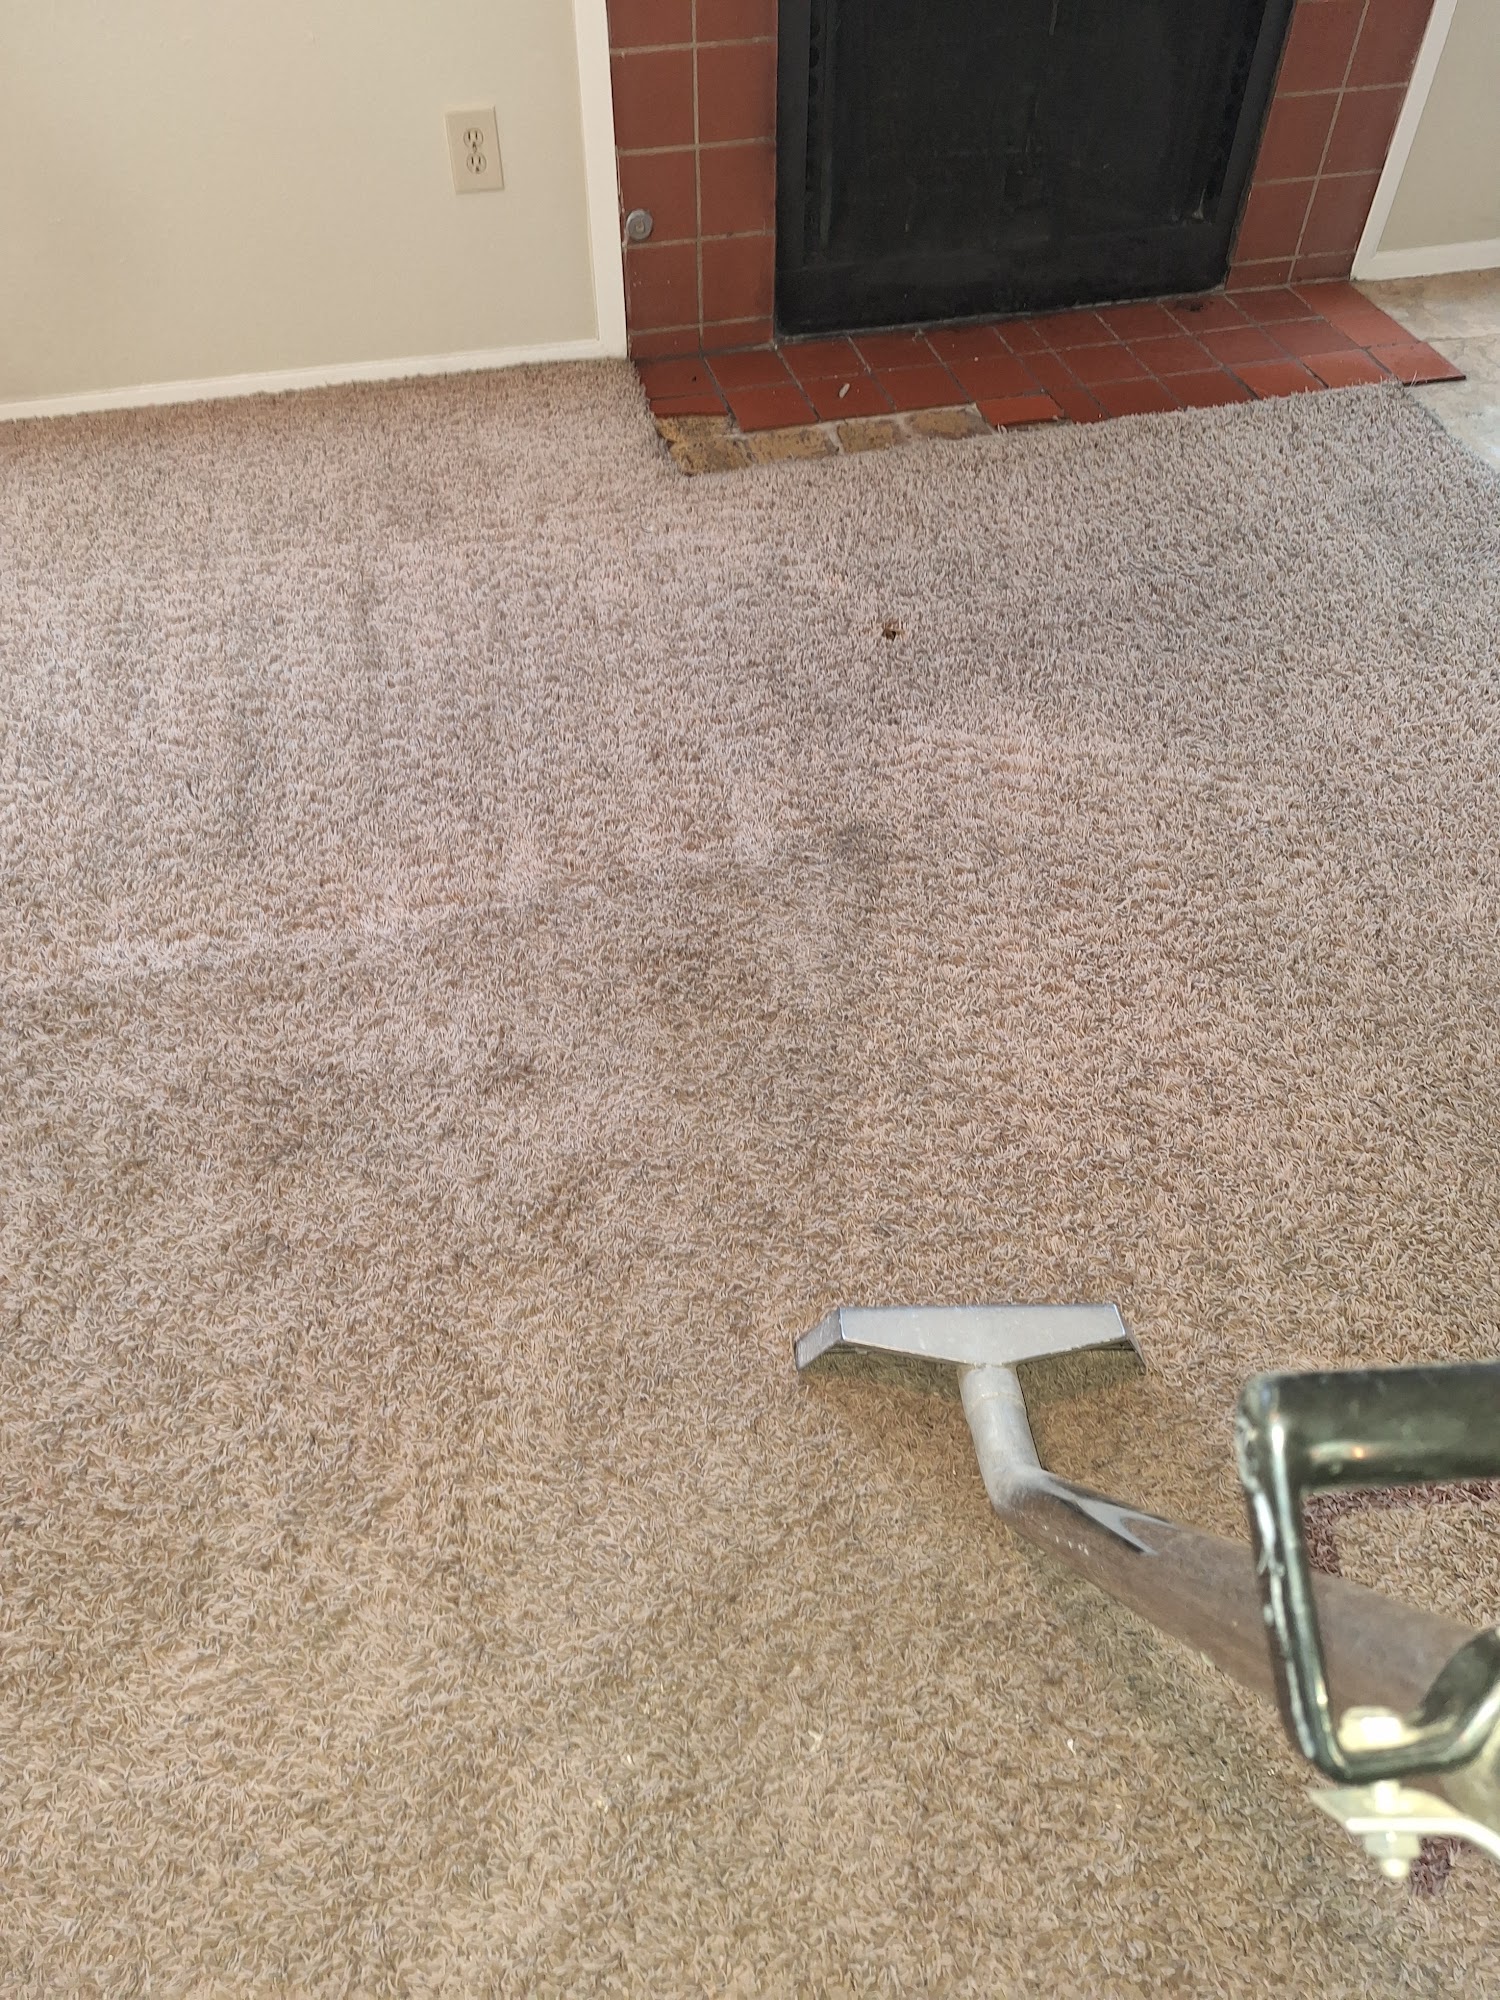 Royal Carpet Cleaning 17200 Abbe Ln, Canyon Texas 79015